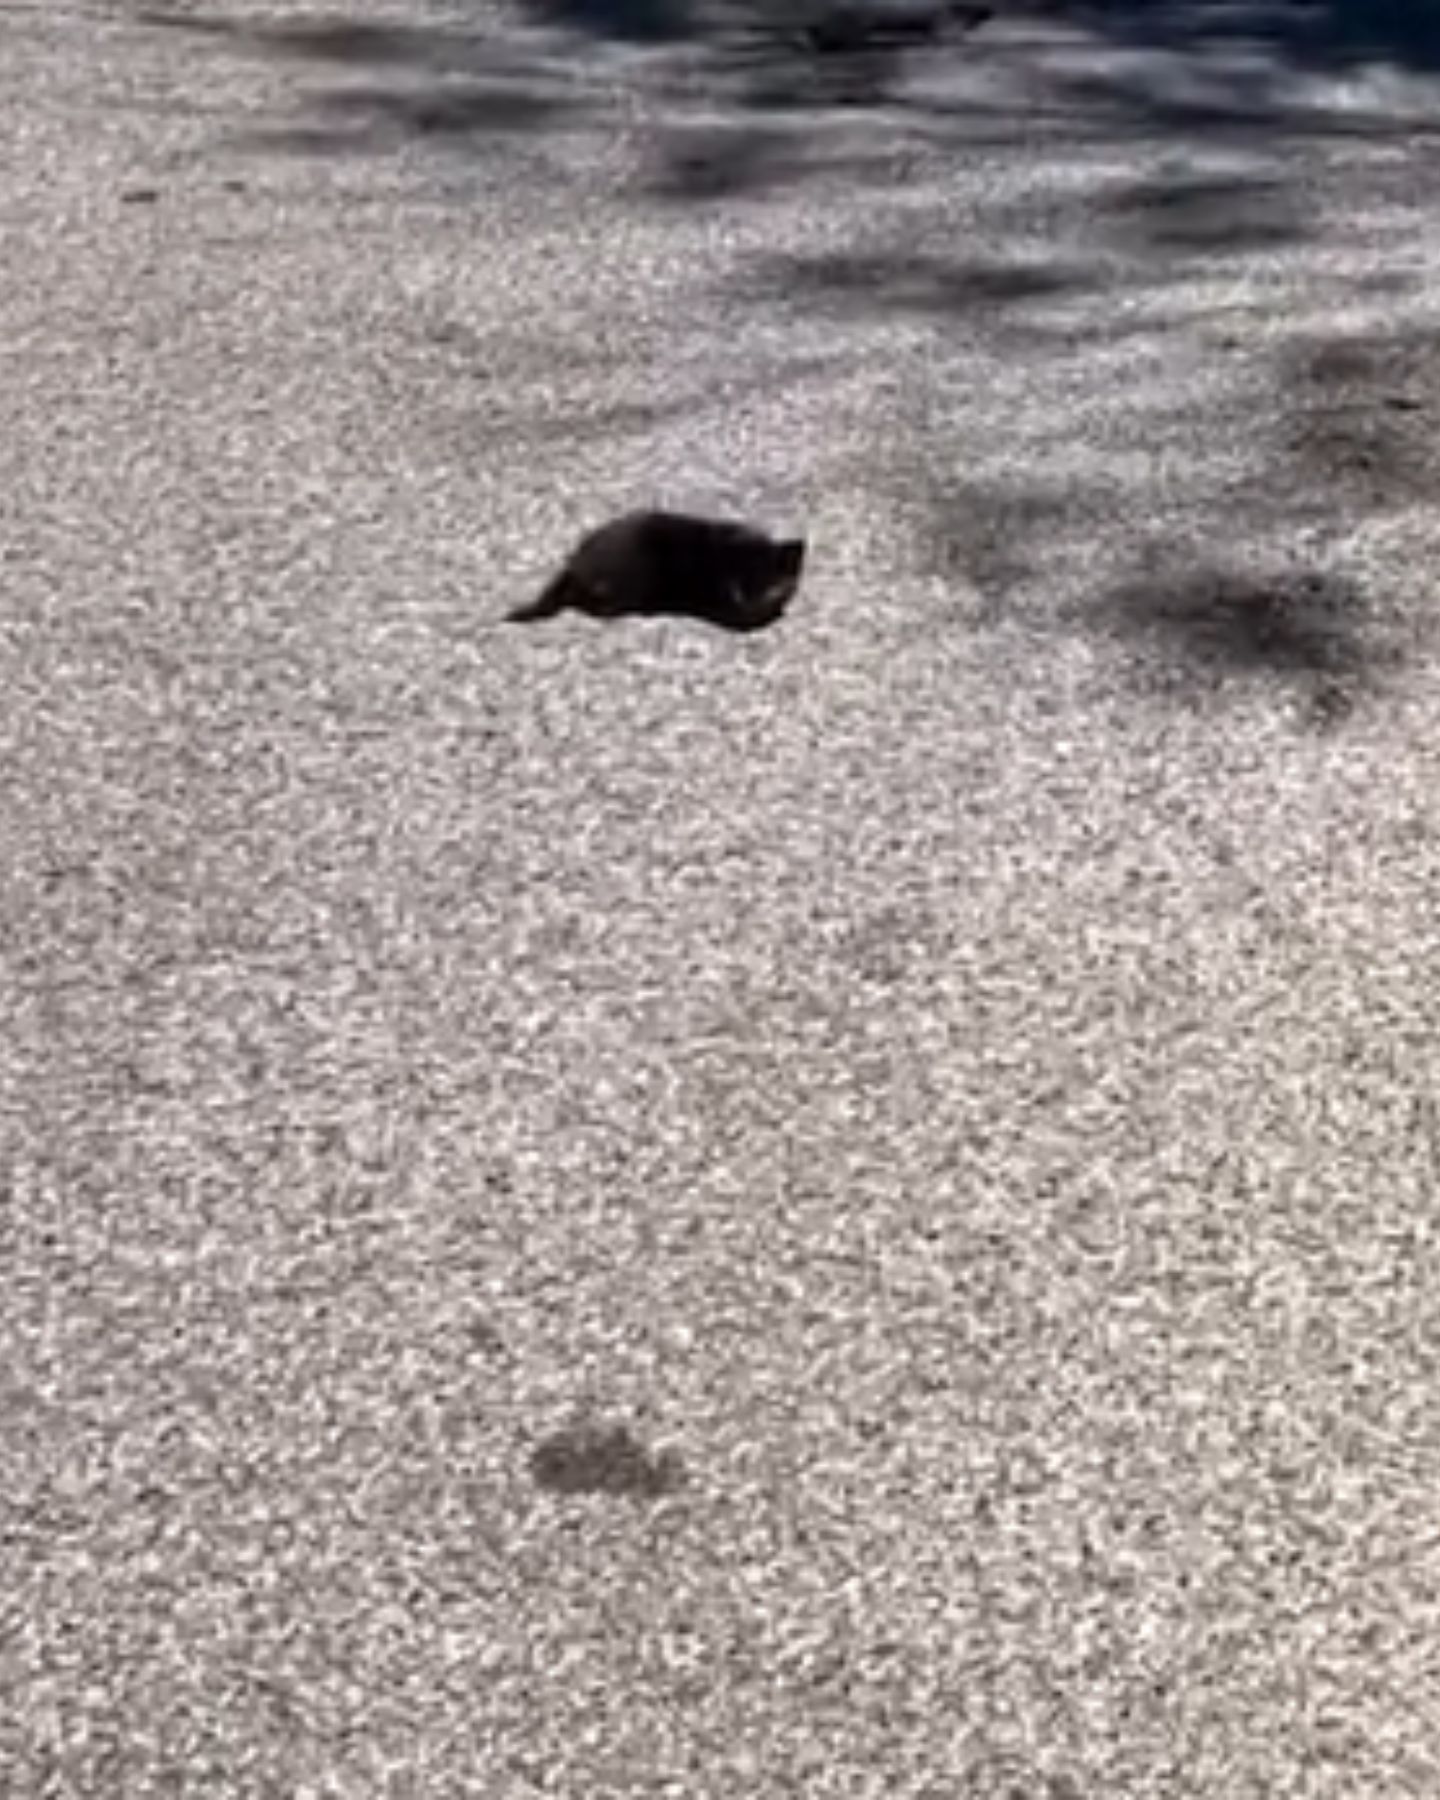 black kitten on the road